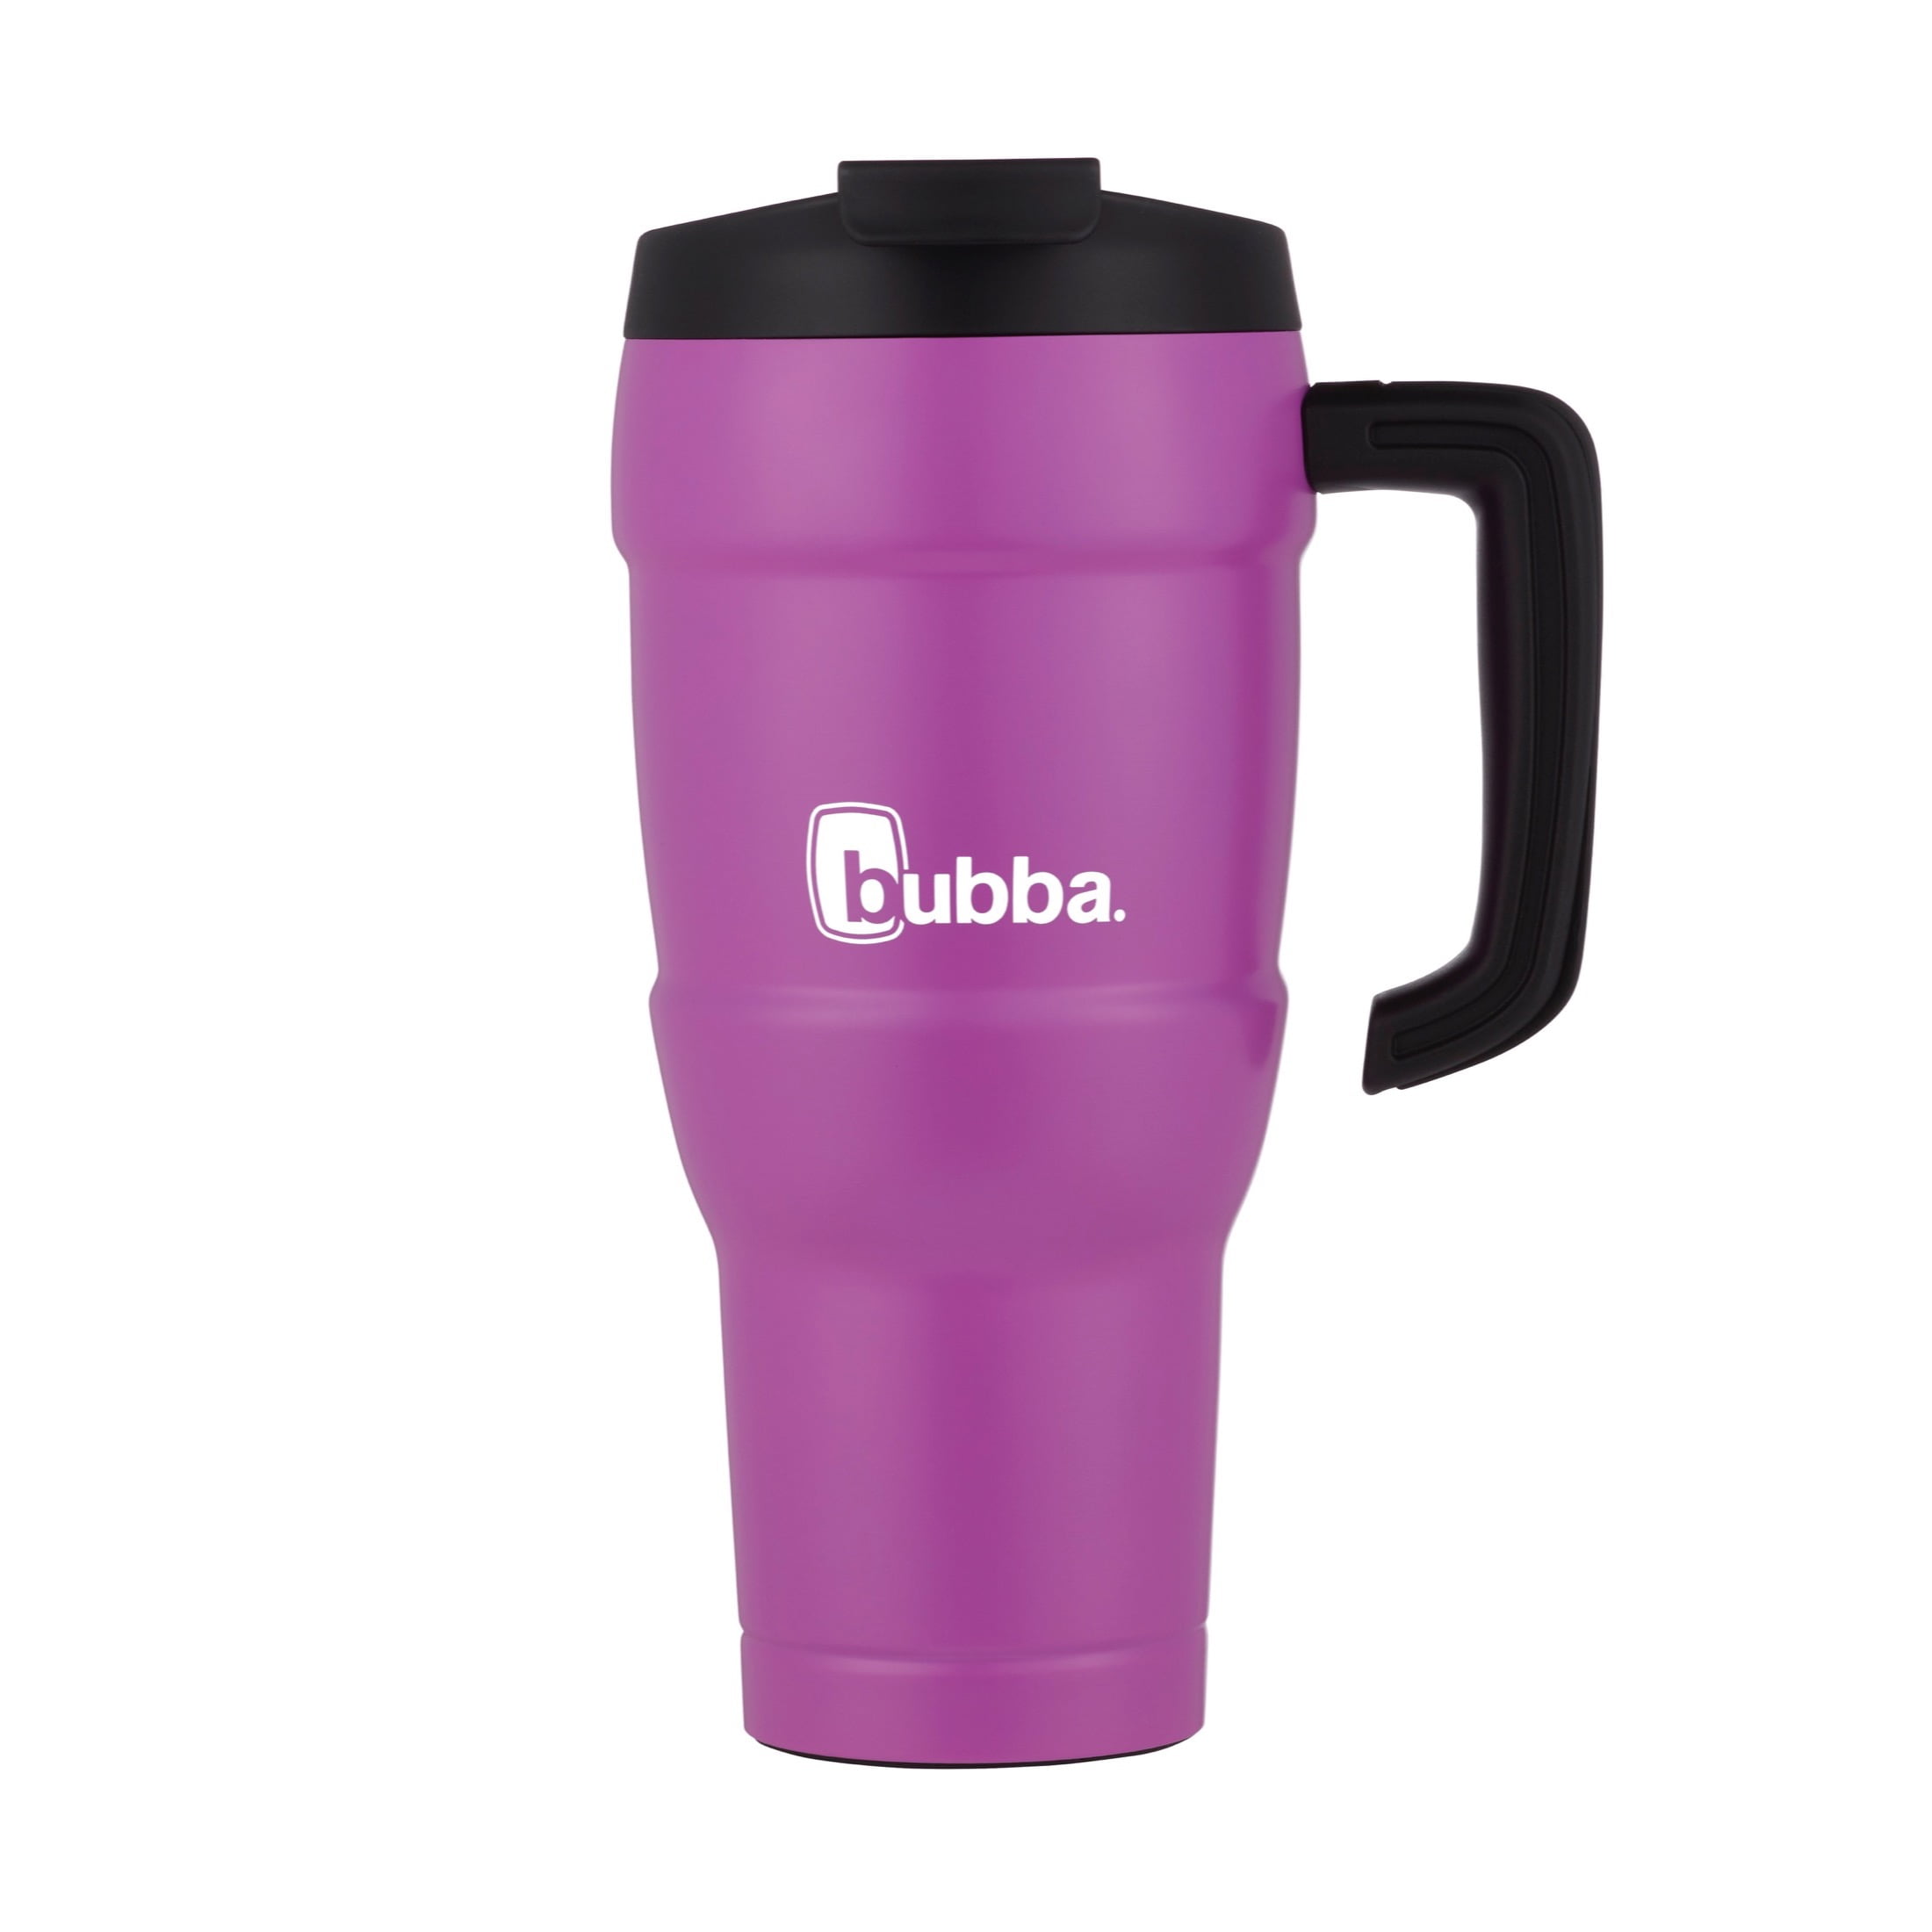 bubba travel mug blue